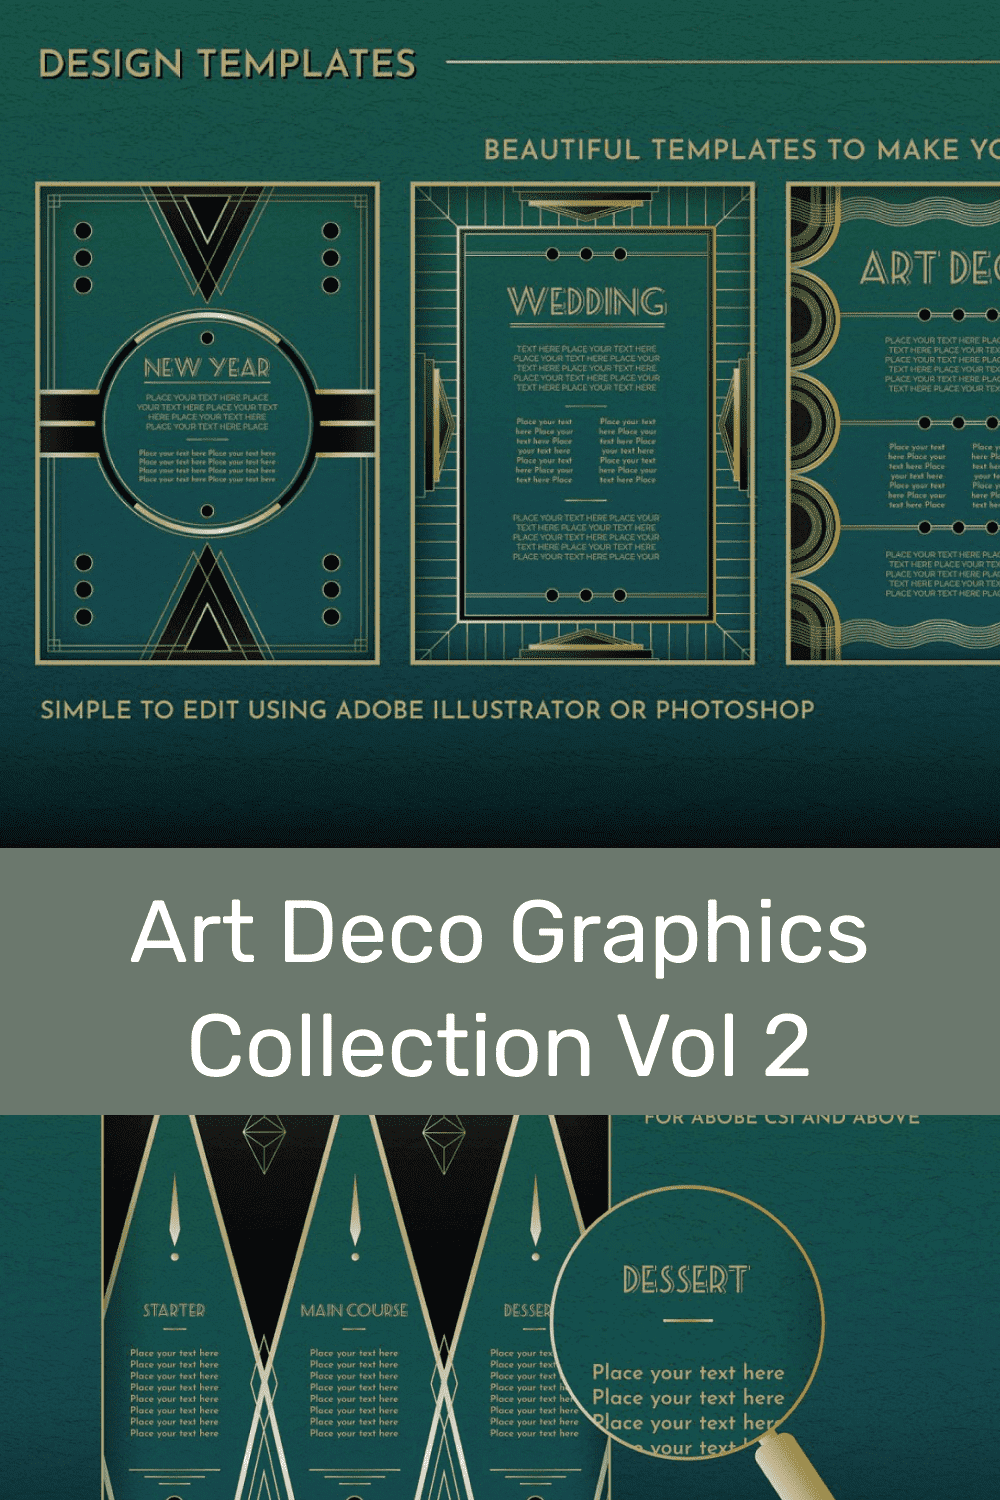 art deco graphics collection vol 2 pinterest image.